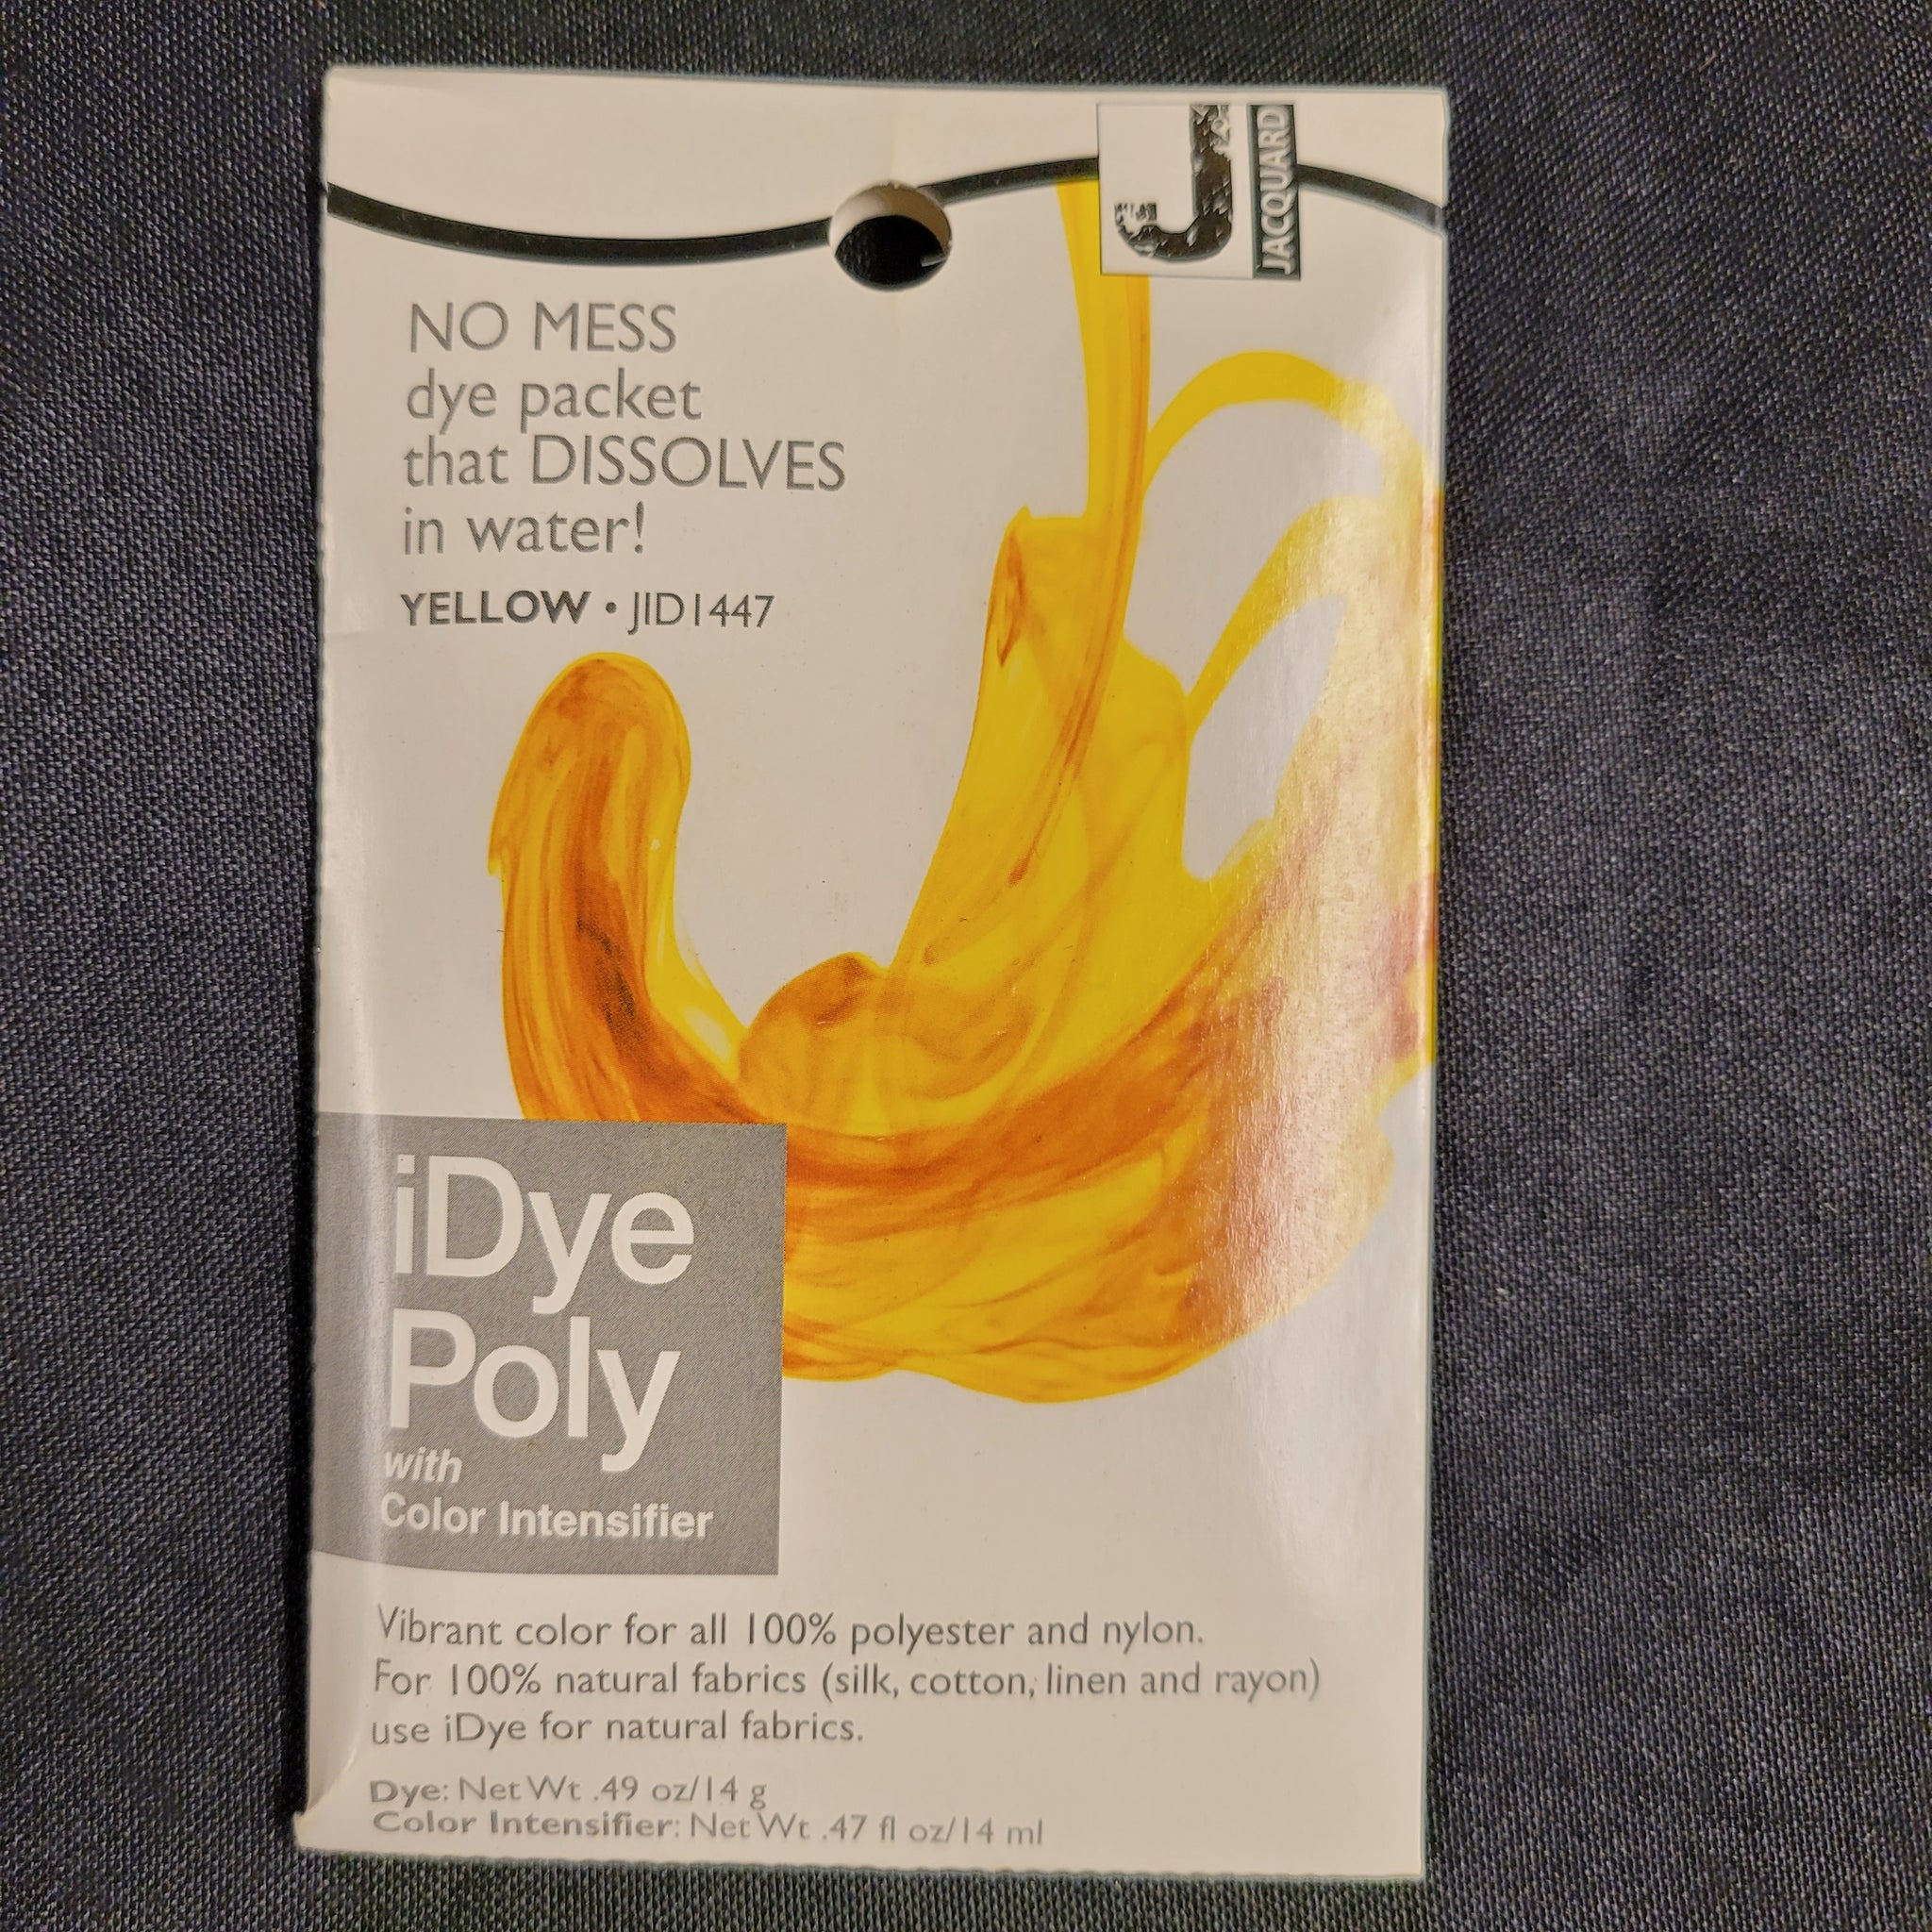 Jacquard iDye - Black, Polyester / Nylon, 14 g packet